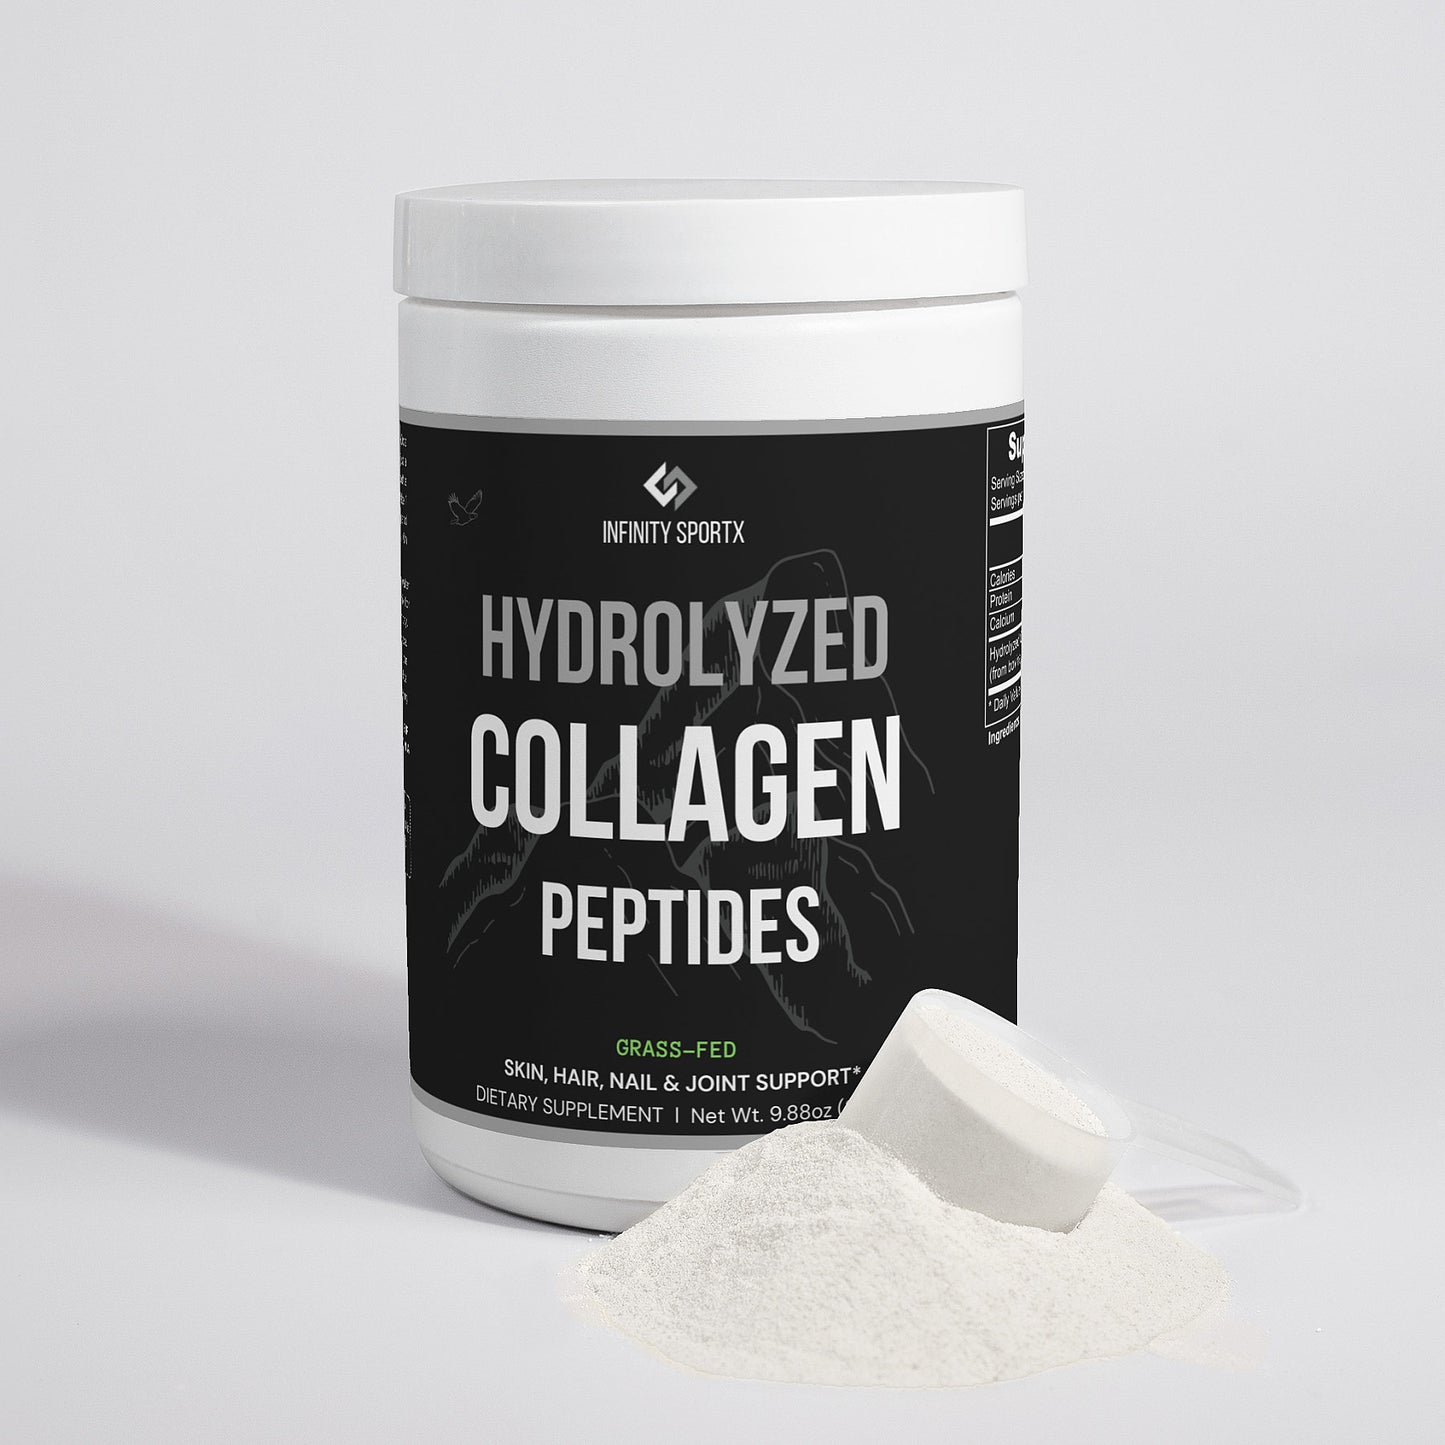 Premium Grass-Fed Hydrolyzed Collagen Peptides